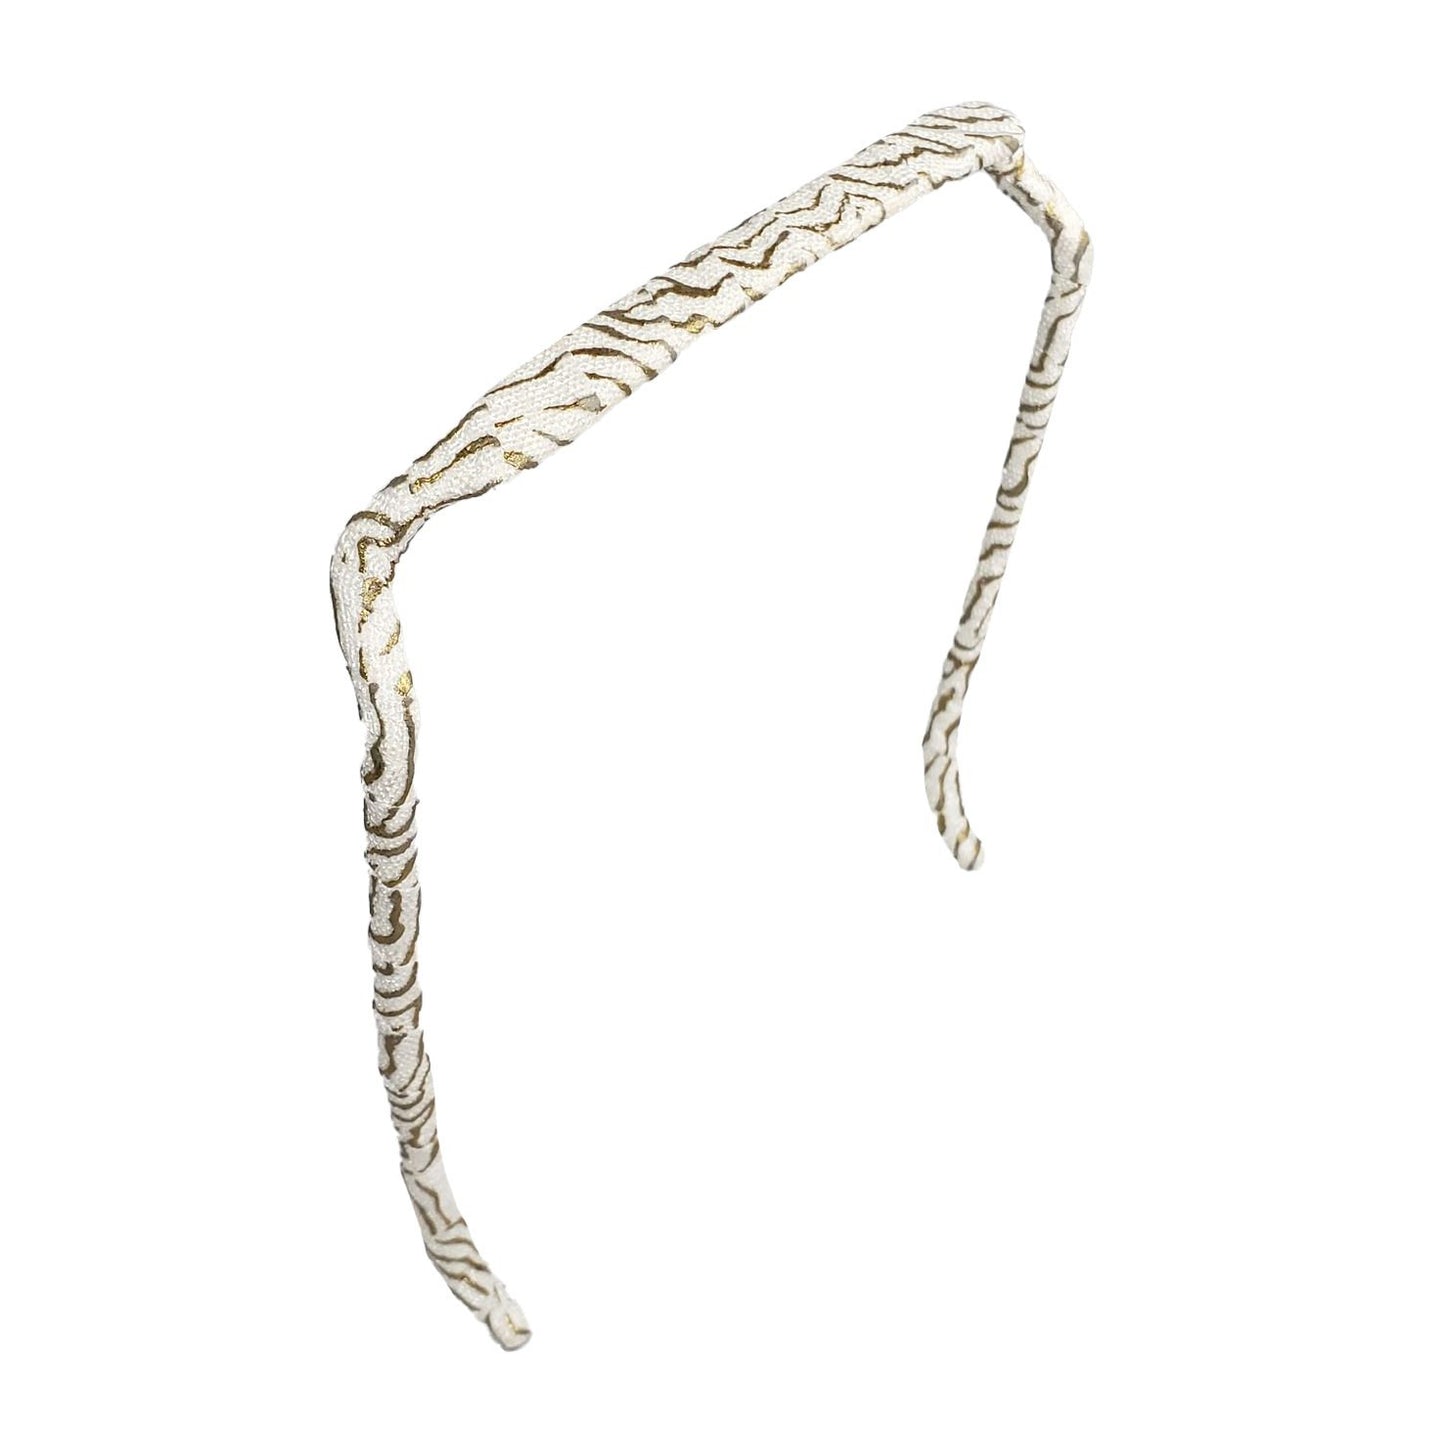 Zebra Gold and White Headband - Zazzy Bandz - hair accessory - curly hair